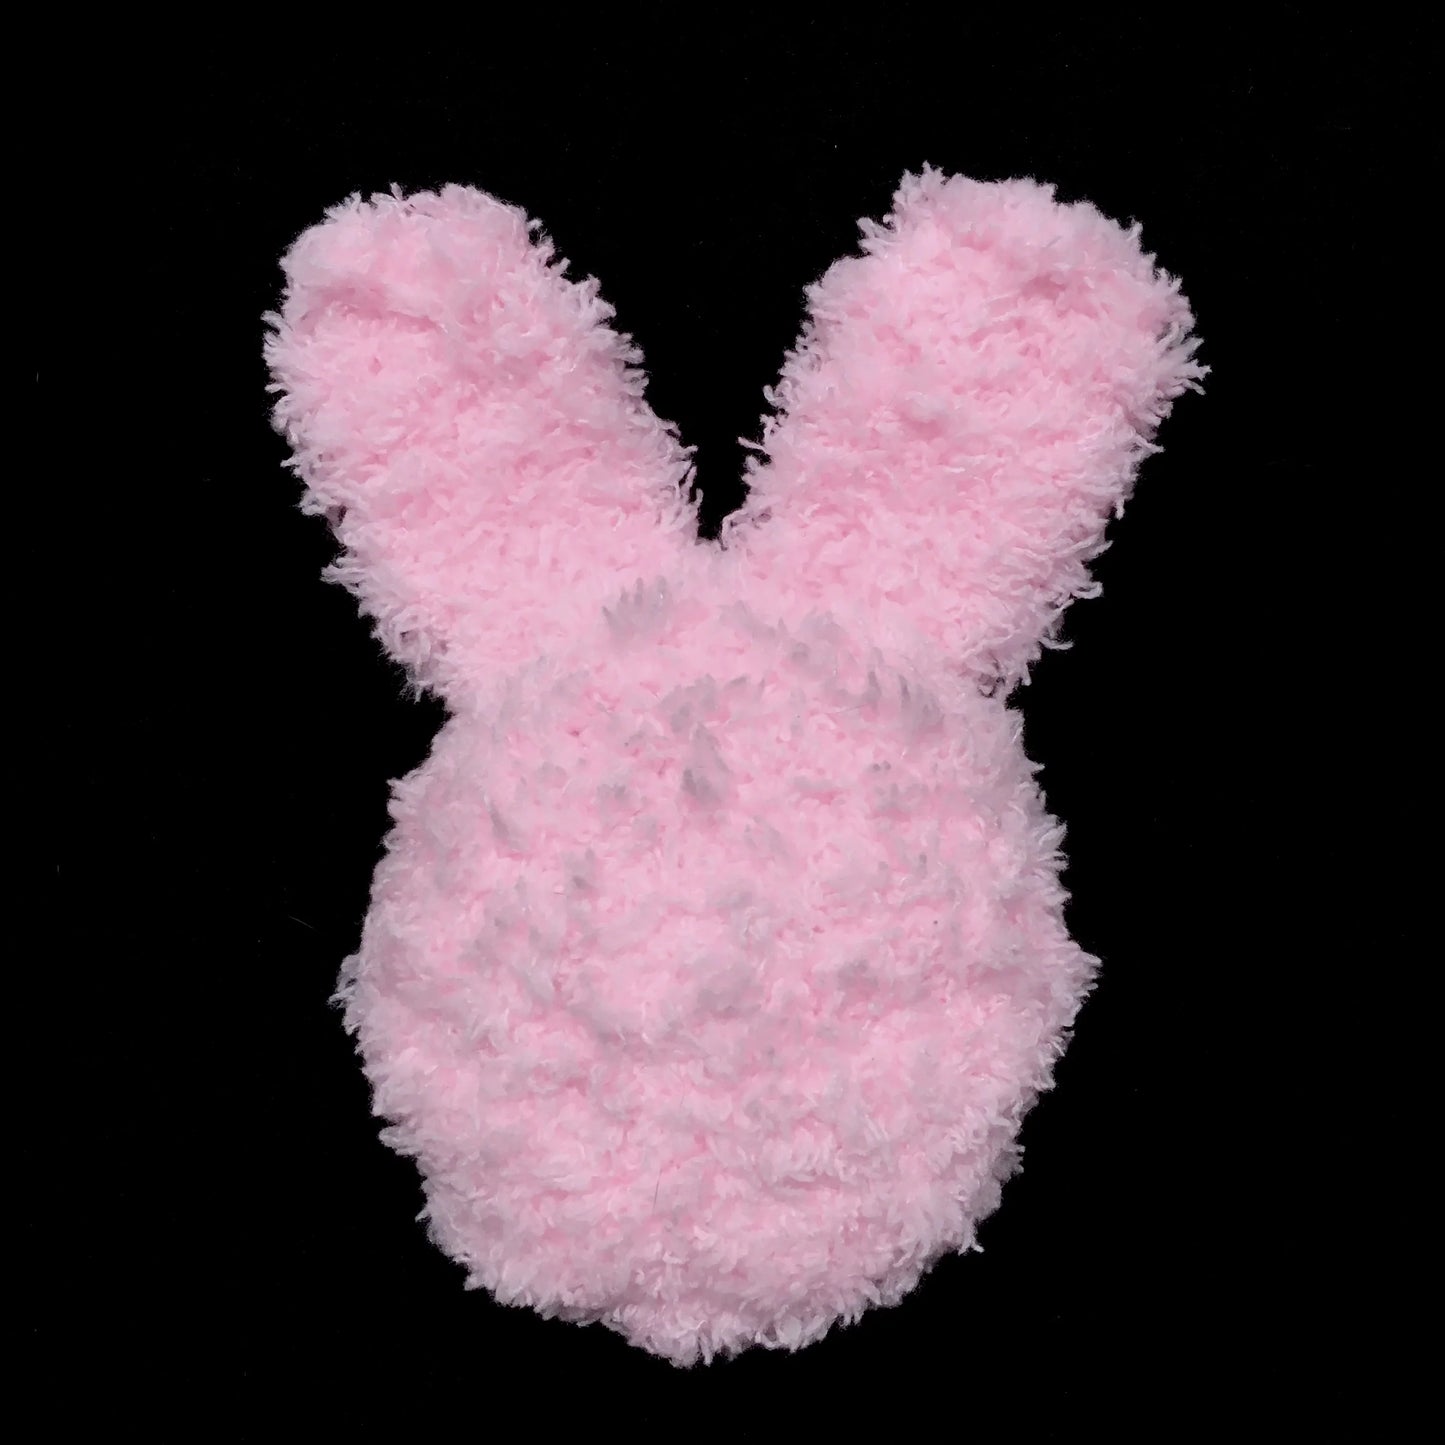 Tamagotchi Fuzzy Cover with Bunny Ears Fuzzy N Chic